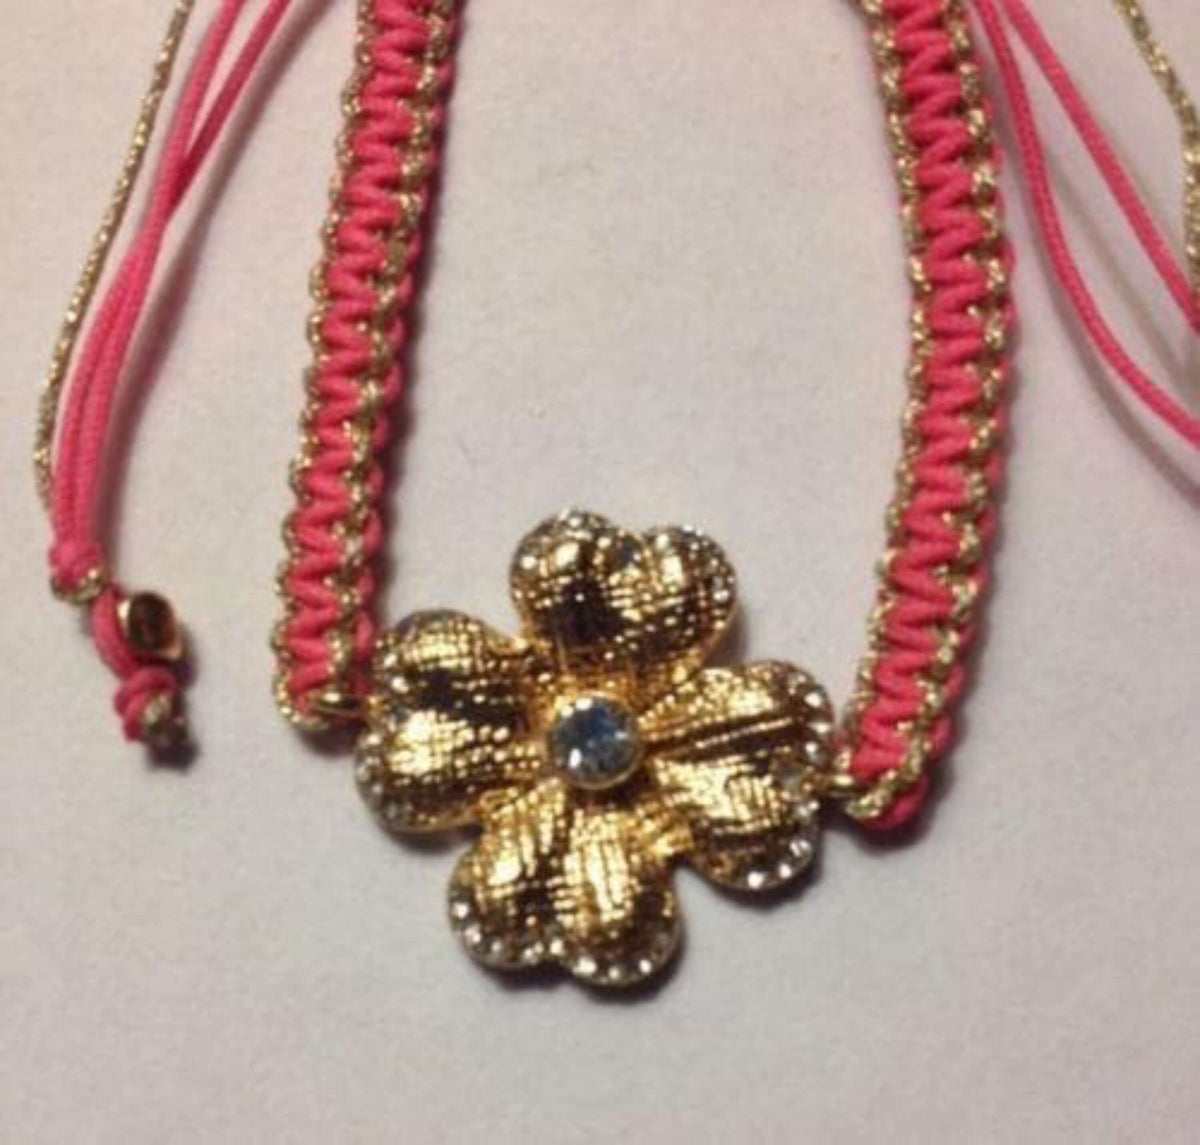 Pink Fashion Crystal metal flower braided yarn friendship bracelet - The House of Awareness